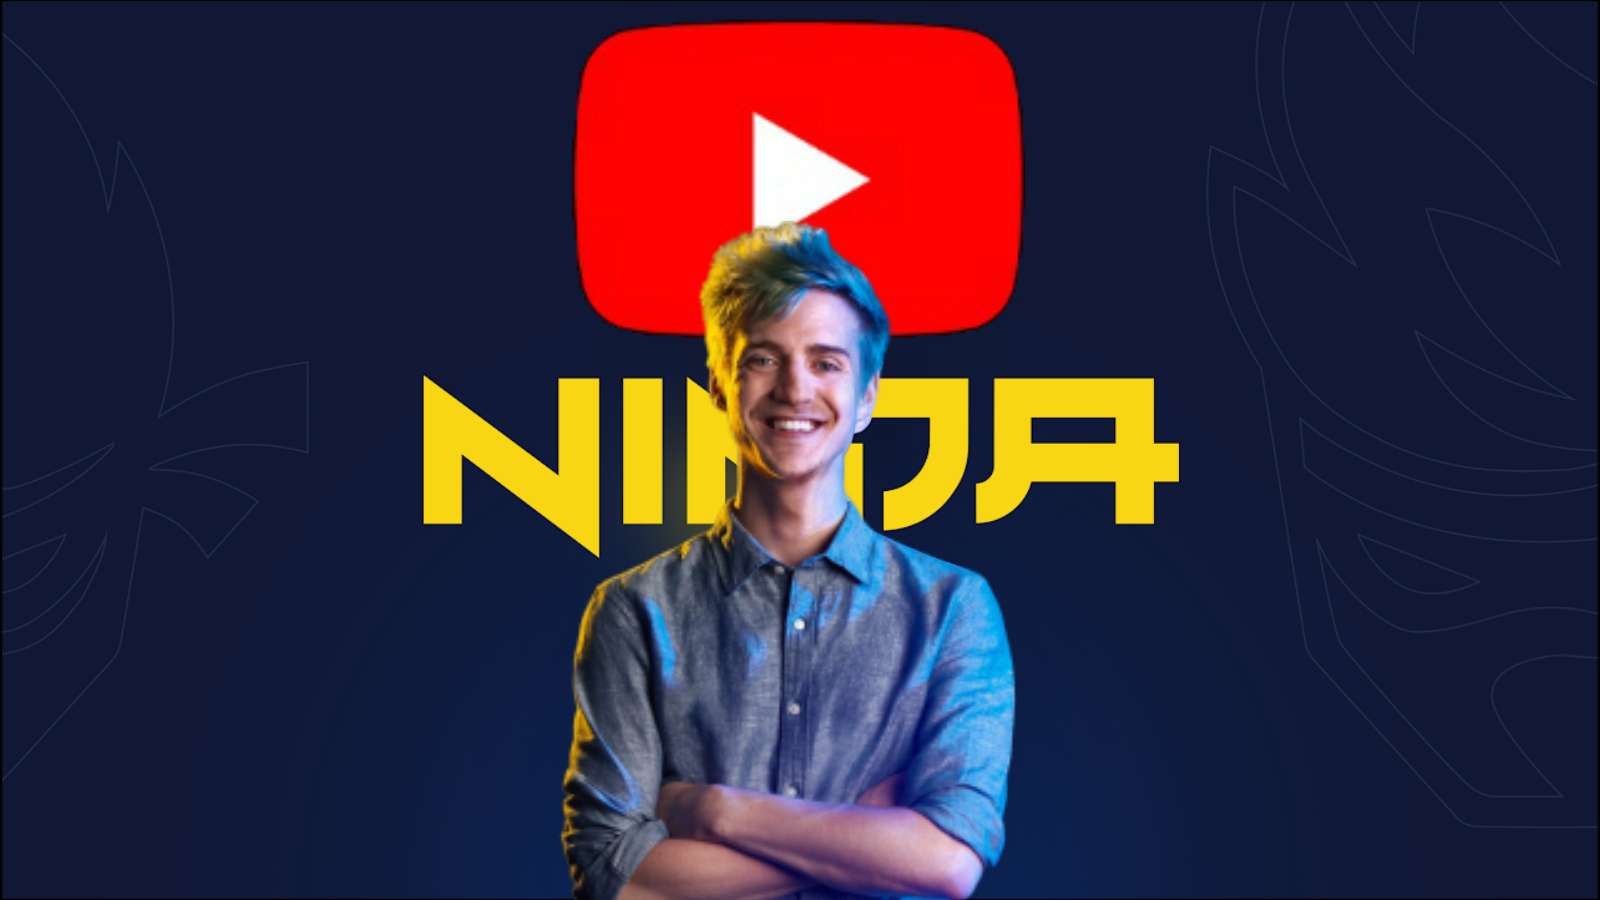 Ninja with the YouTube logo